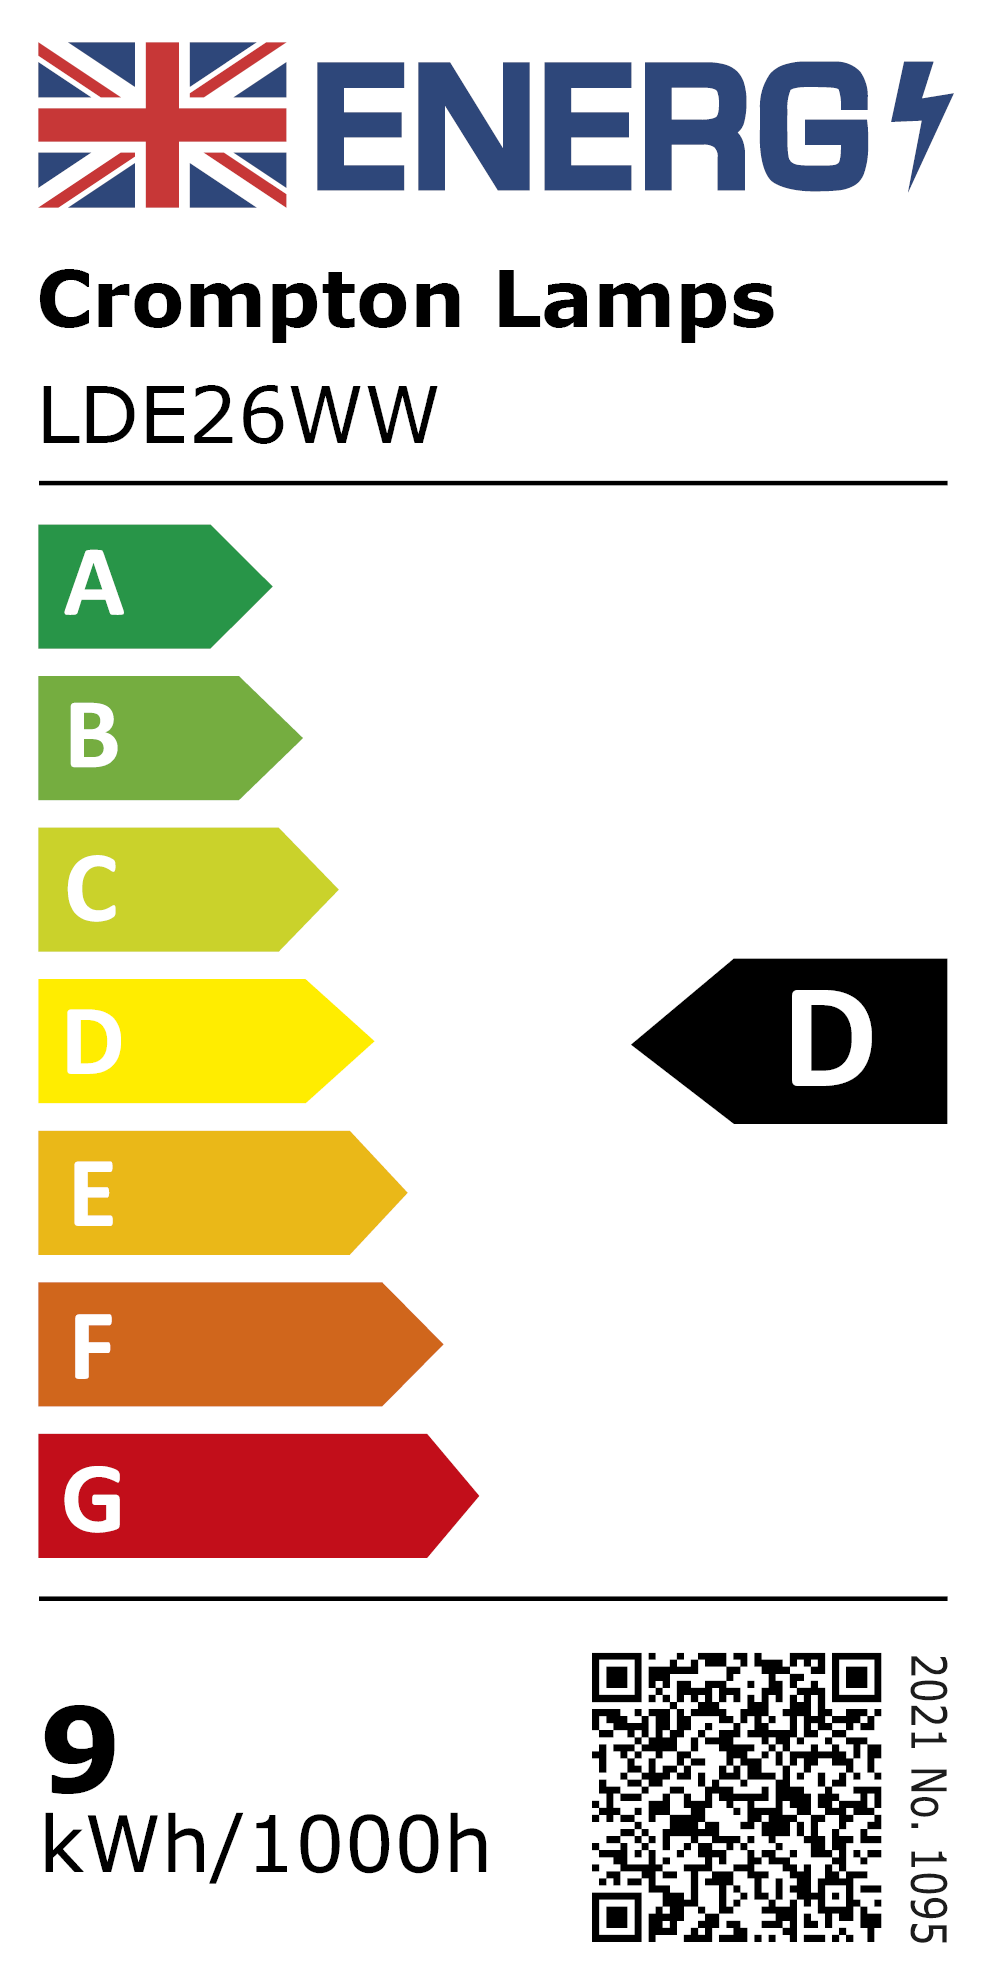 New 2021 Energy Rating Label: MPN LDE26WW